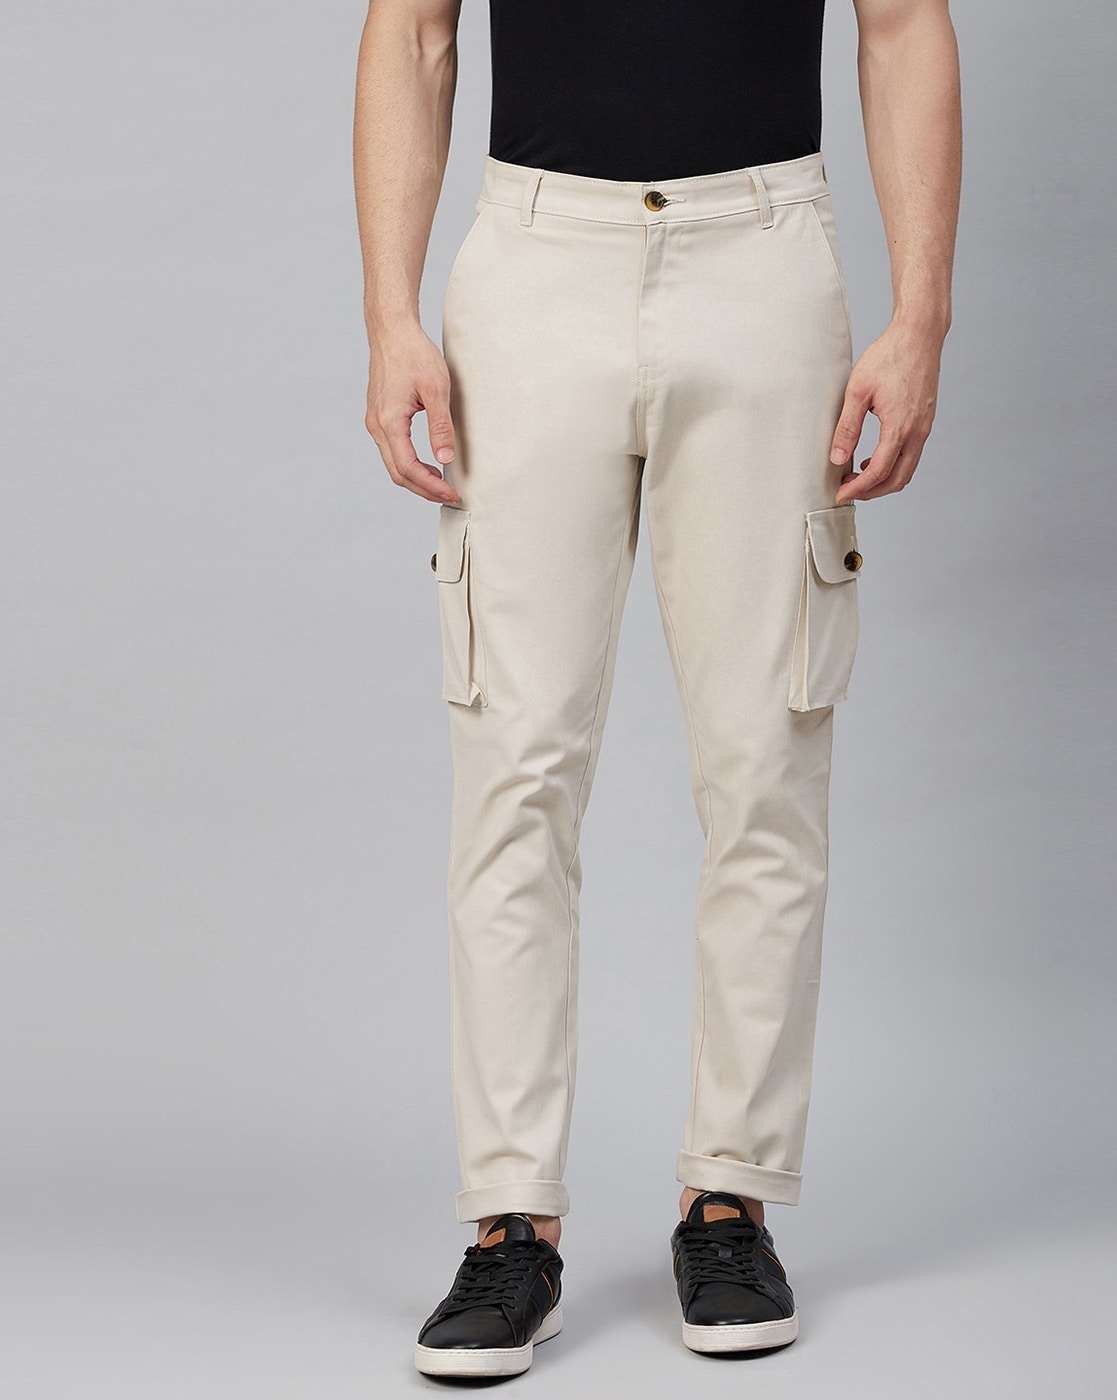 Top 82+ cream trouser combination latest - in.cdgdbentre